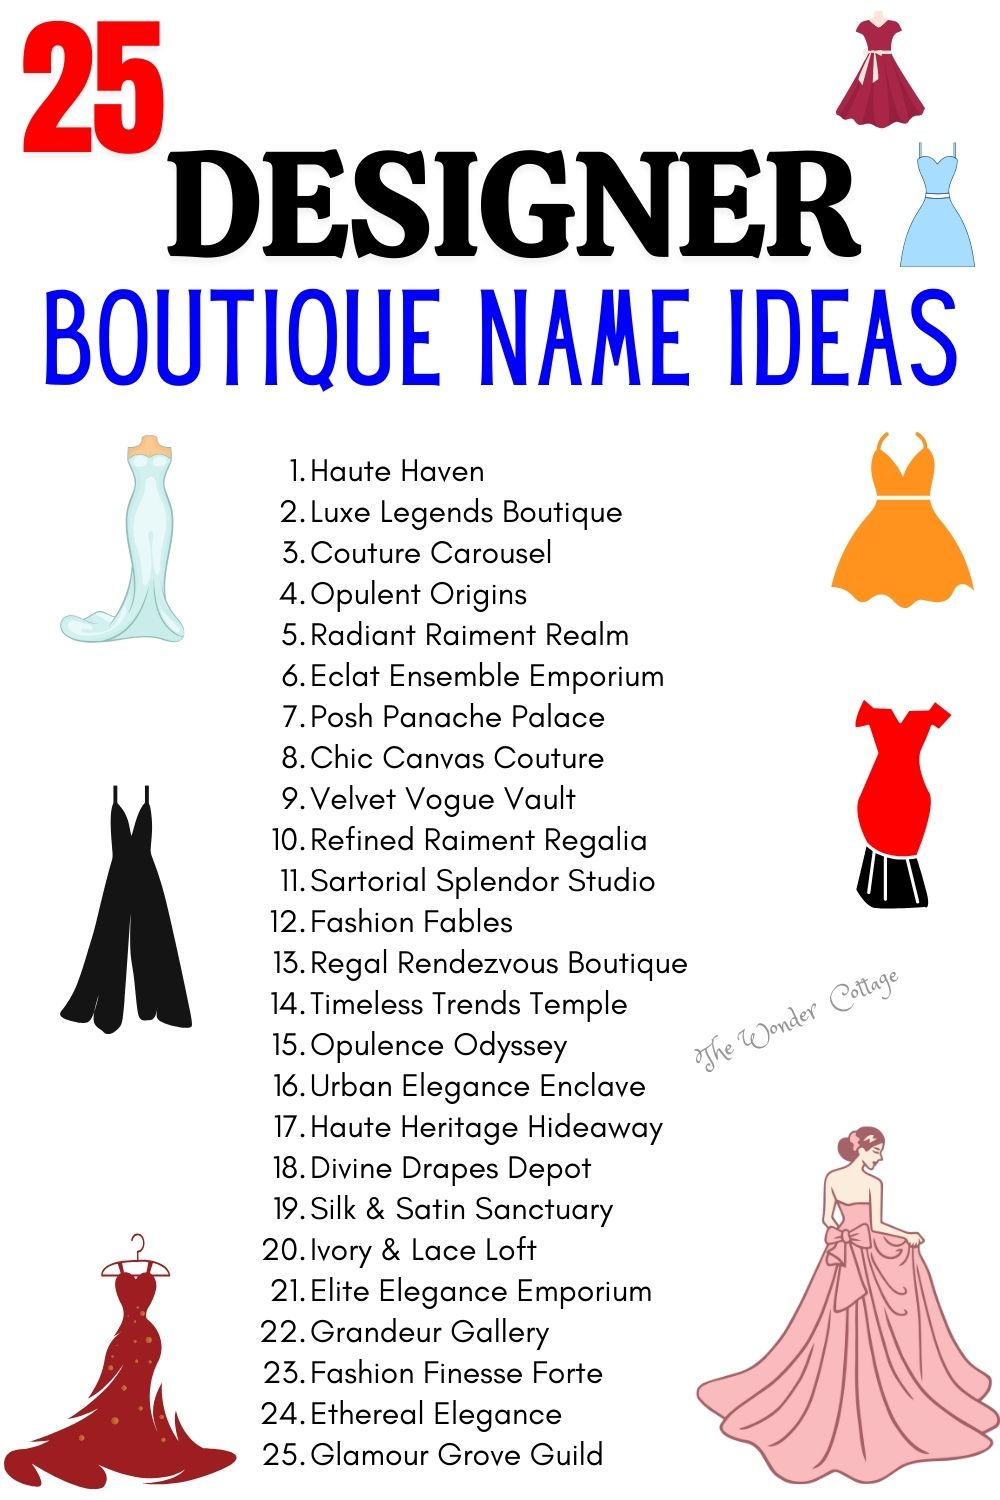 25 Designer Boutique Name Ideas